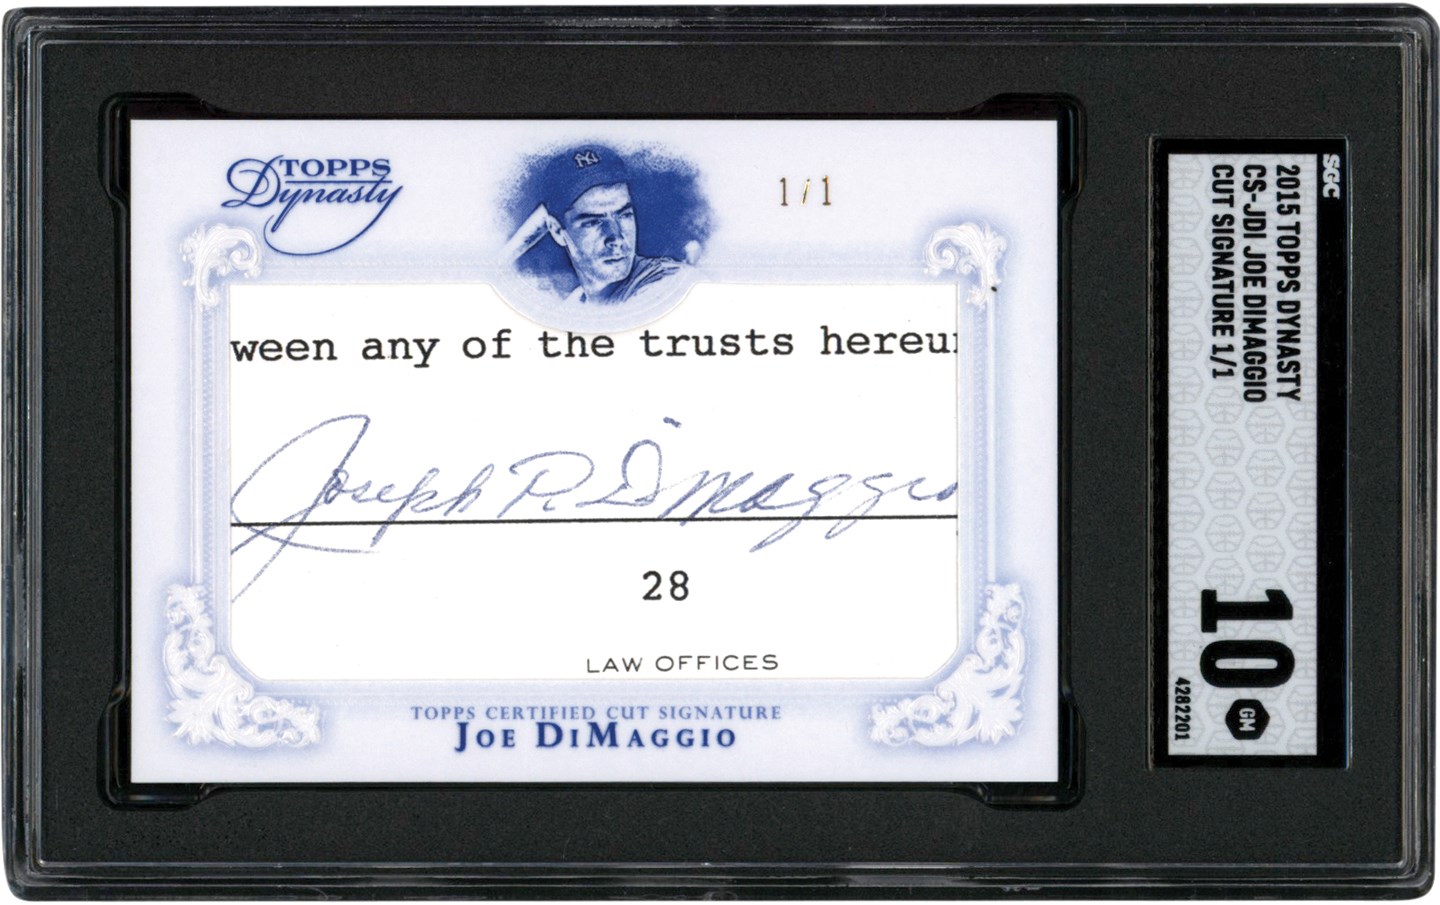 Modern Sports Cards - 2015 Topps Dynasty Baseball Cut Signatures #CSJD Joe DiMaggio Autograph #1/1 SGC GEM MINT 10